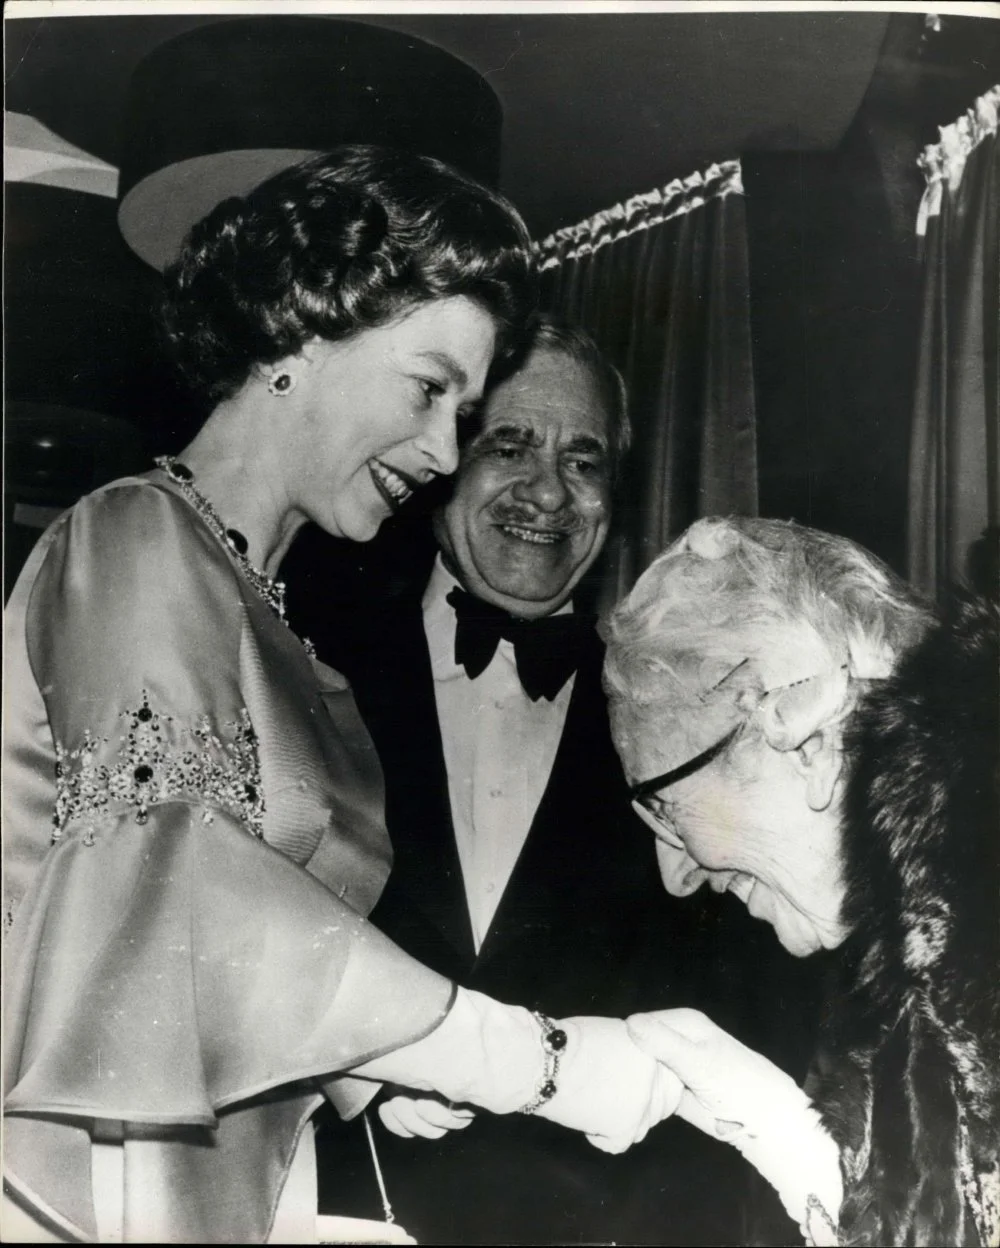 Queen meets Agatha Christie at Film Premier. 1974/Alamy